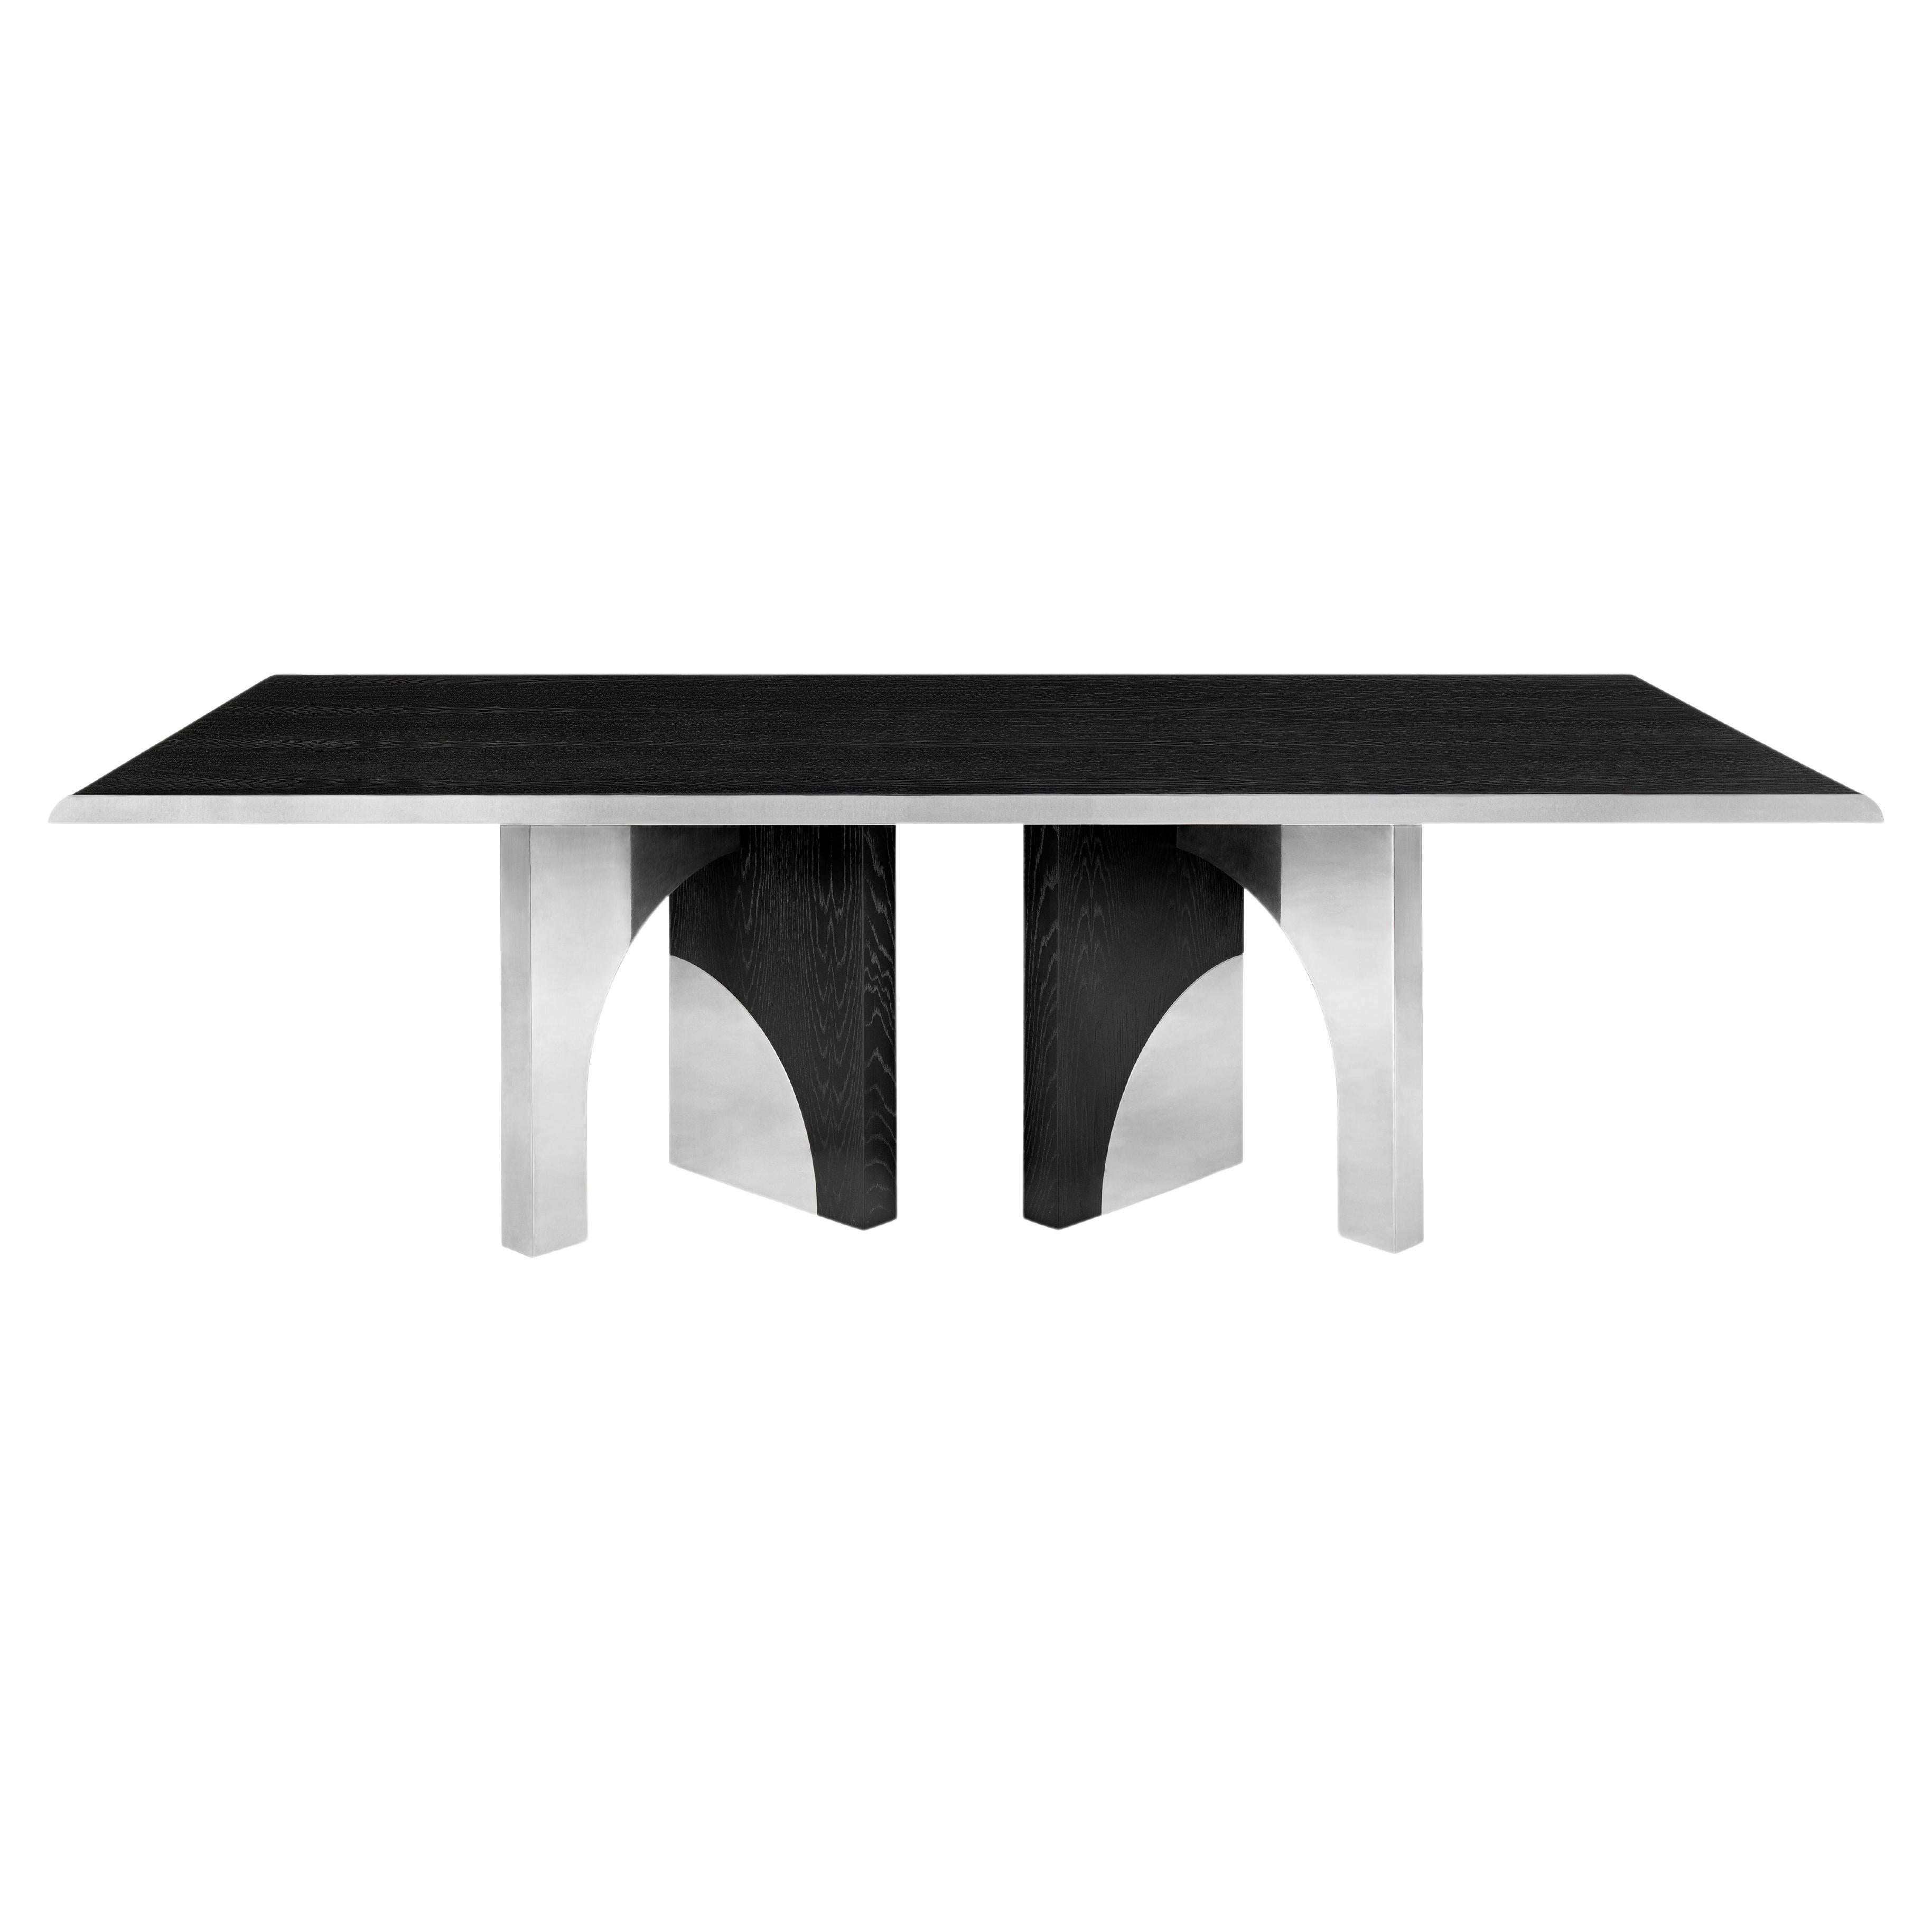 Utopia Dining Table, Dark Oak and Steel, InsidherLand by Joana Santos Barbosa For Sale